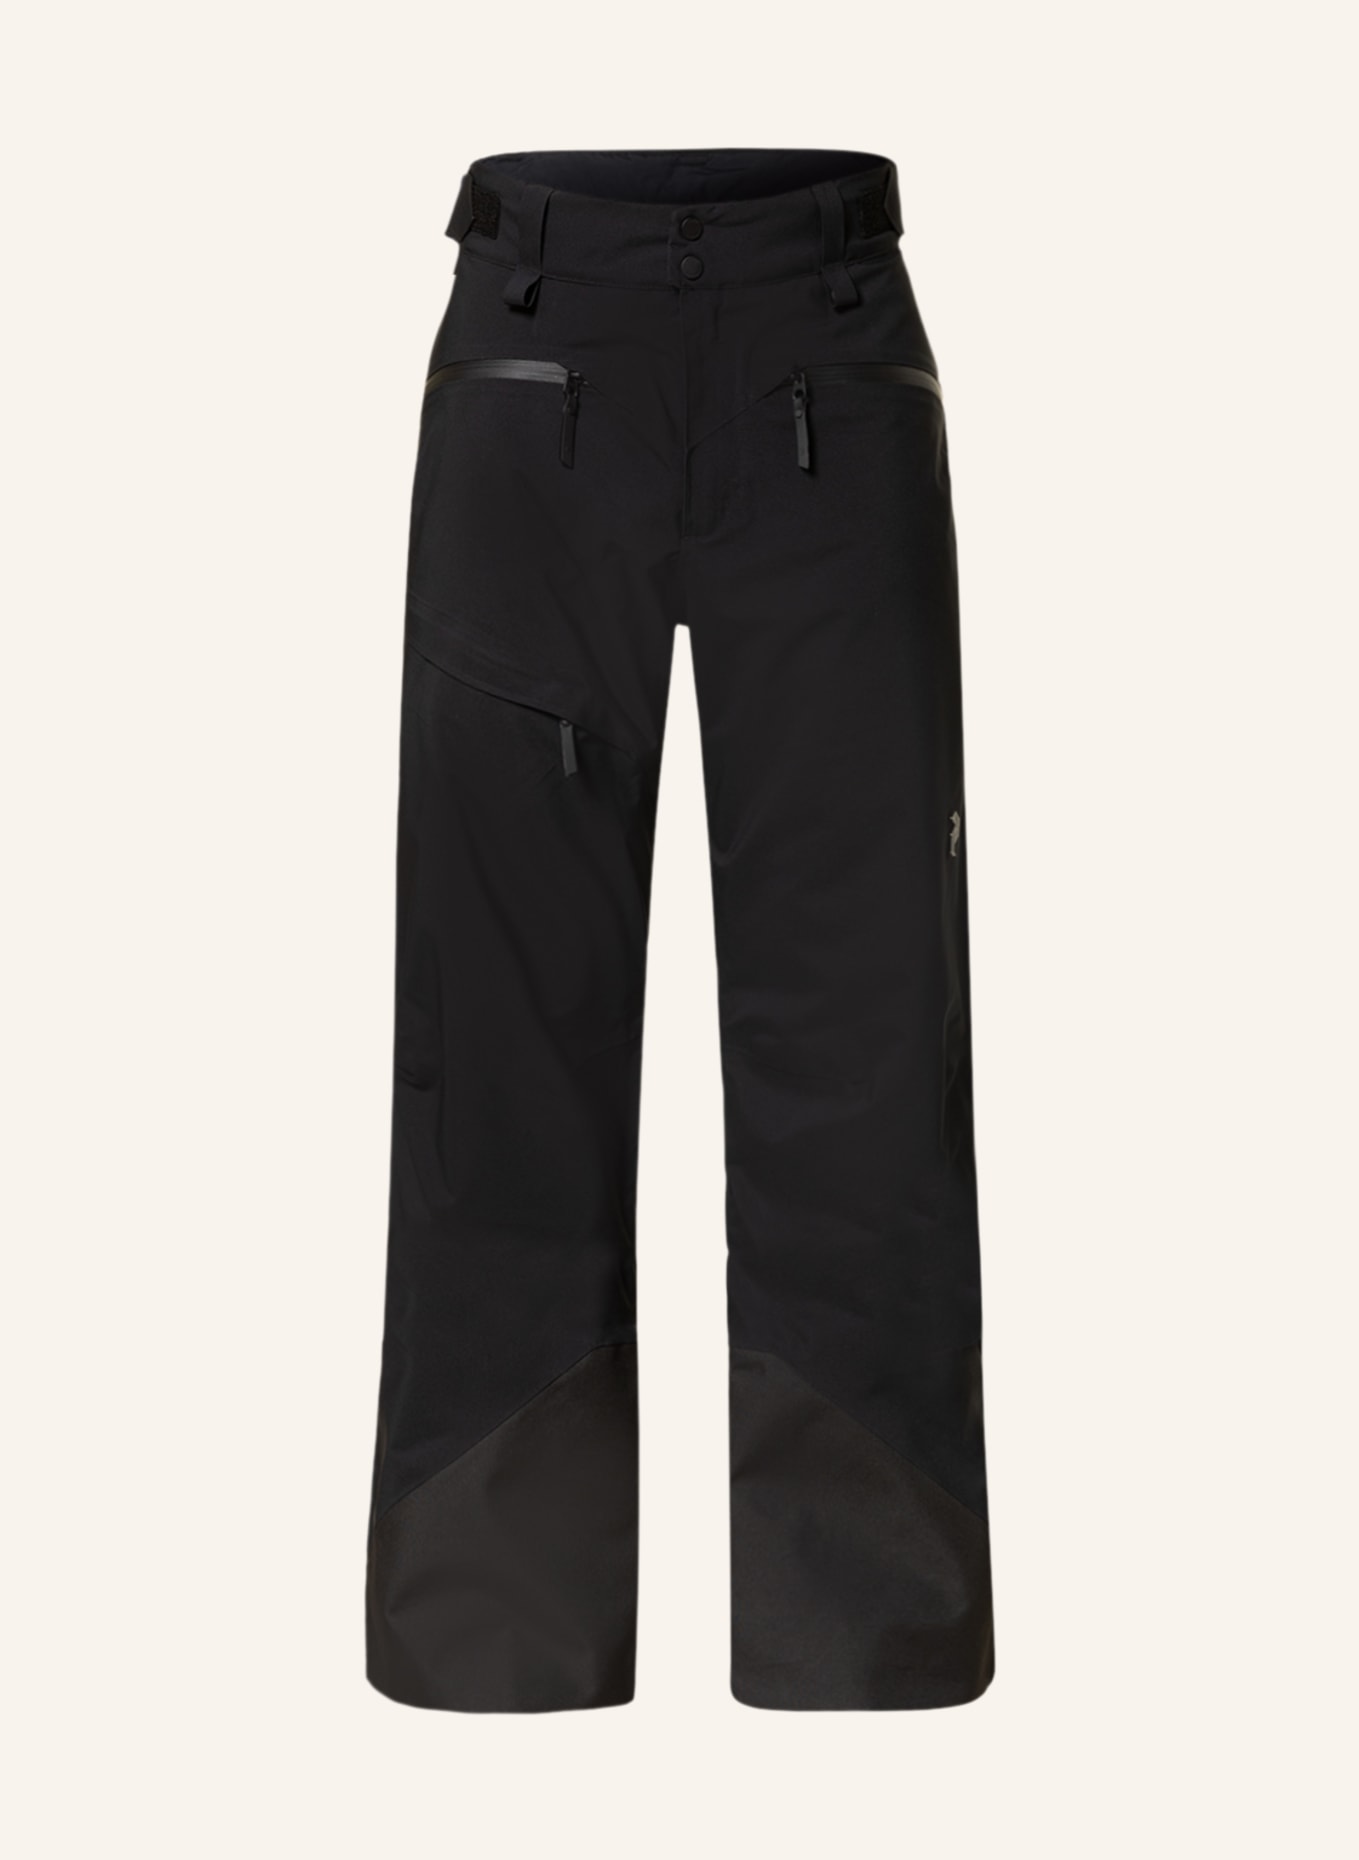 Peak Performance Ski pants INSULATED 2L in black